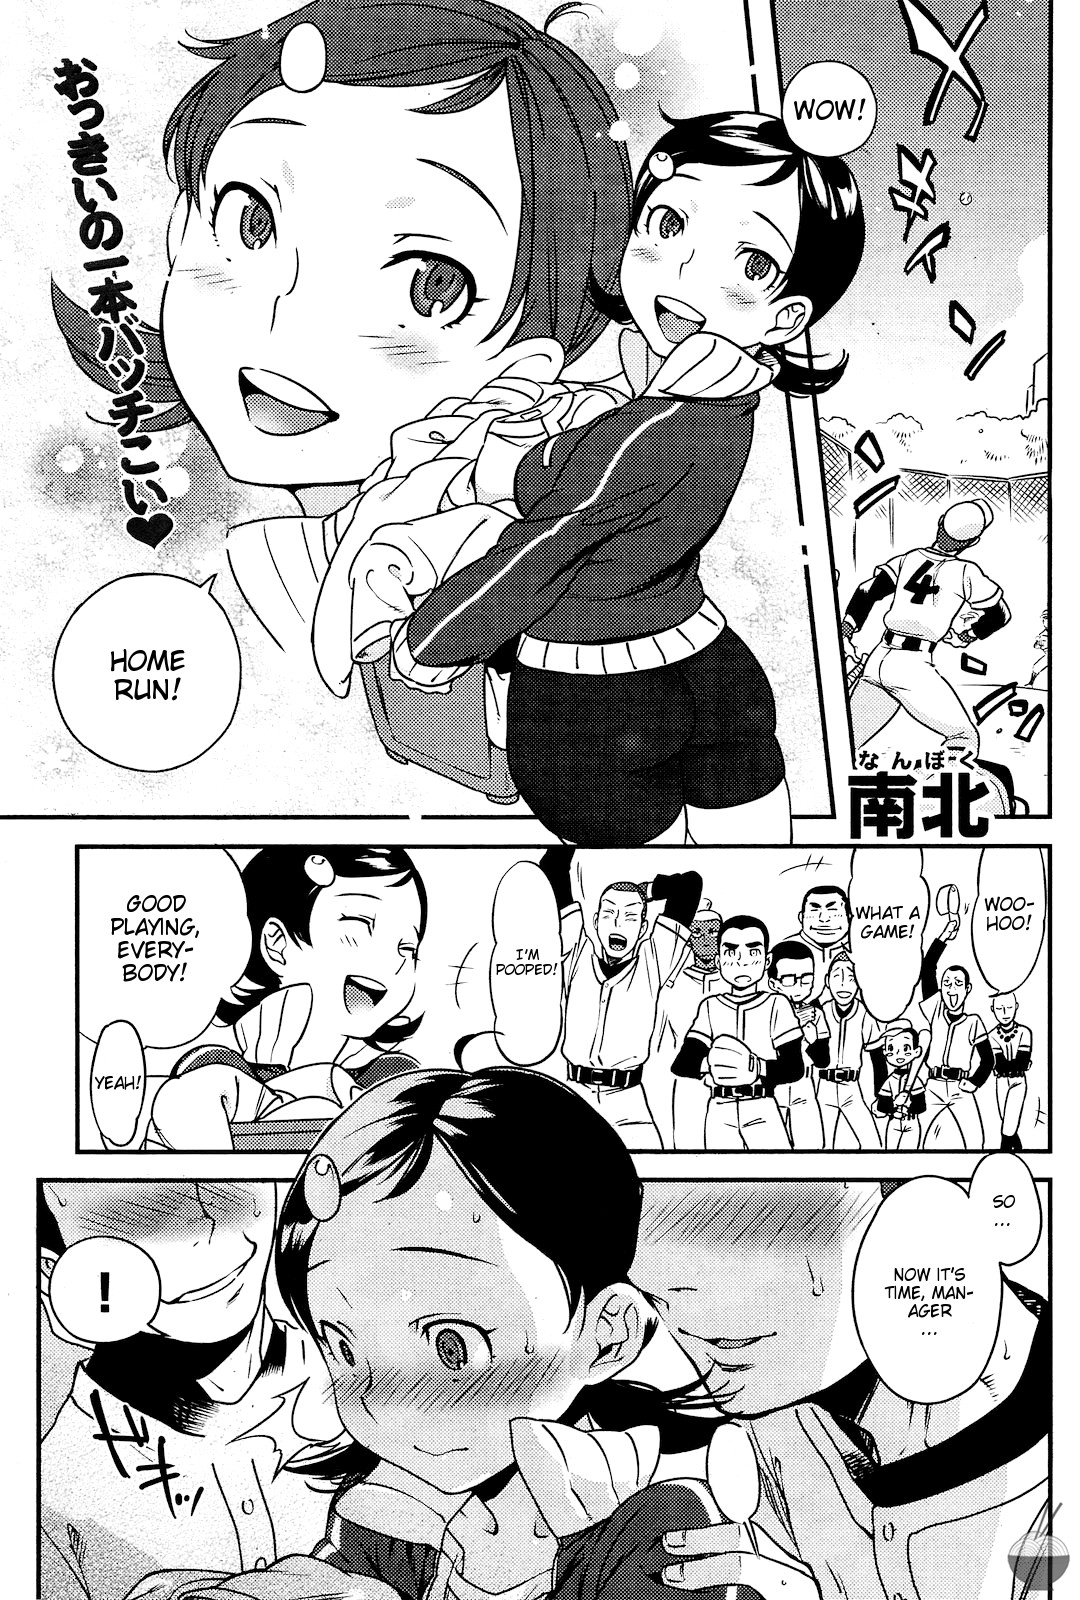 Cartoon Hentai Bukkake - Nanboku] Bukkake Manager - [Nanboku] Bukkake Manager [English] (Soba-Scans)  - Free Hentai Online - Porn Comics - Adult Comics - Hentai Manga